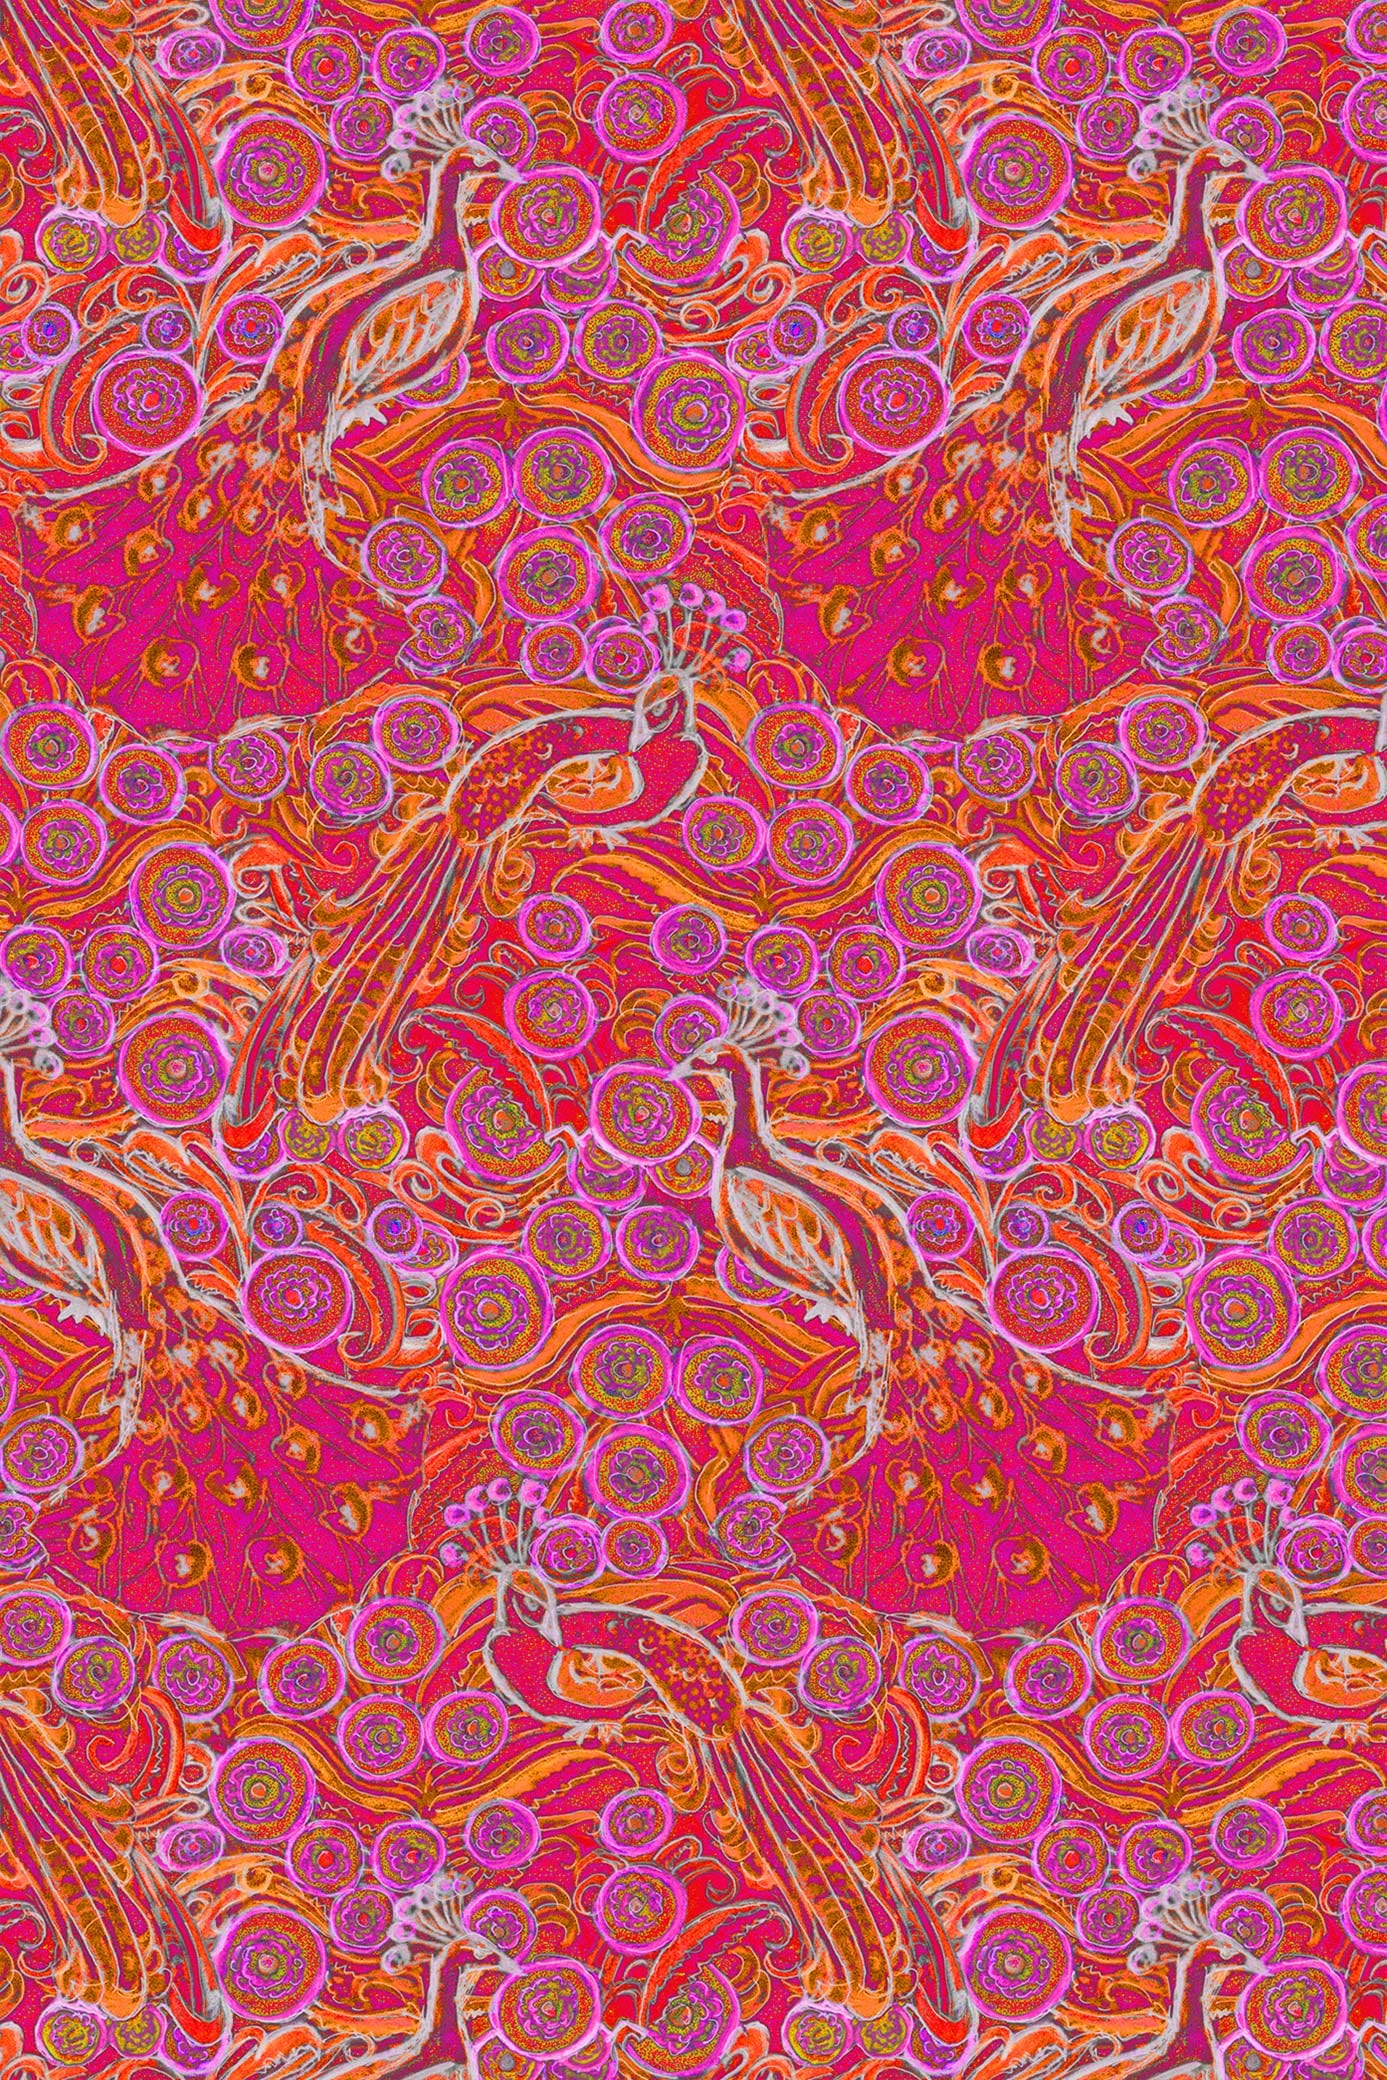 W.E.T. by Ines Schneider Dress Skirt Palma / Pavone mode hamburg print sommerkleid Unique Prints Summer Dress Handdesignierte Prints Print